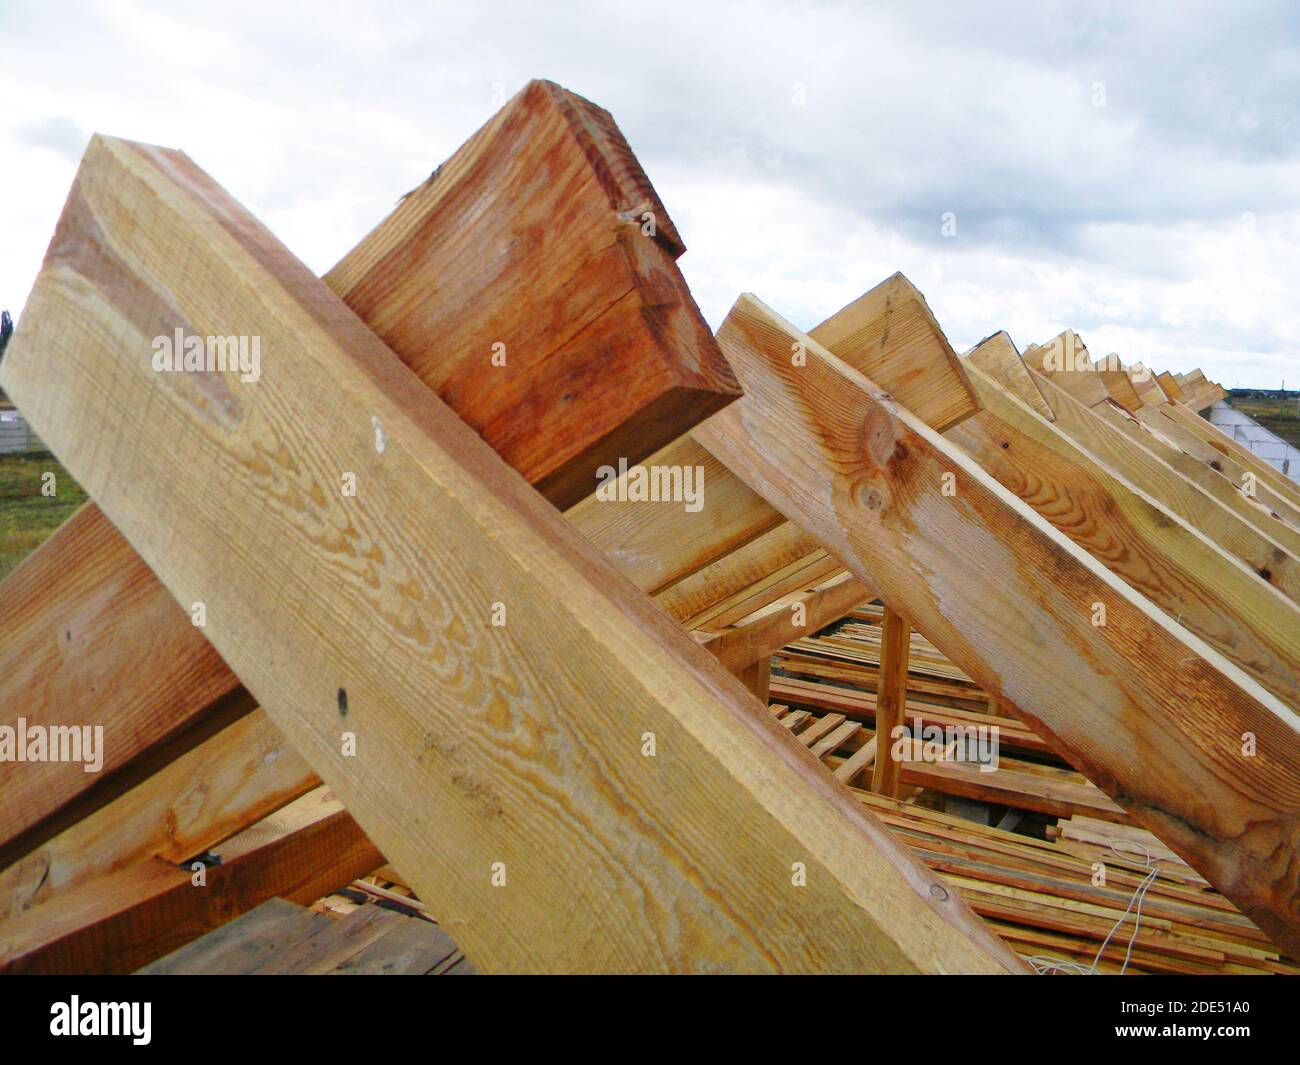 Unfertiges Haus Dach Dachkonstruktion Traversen, Holzbalken, Traufe, Holz. Haus Dach Holzrahmen Konstruktion. Stockfoto